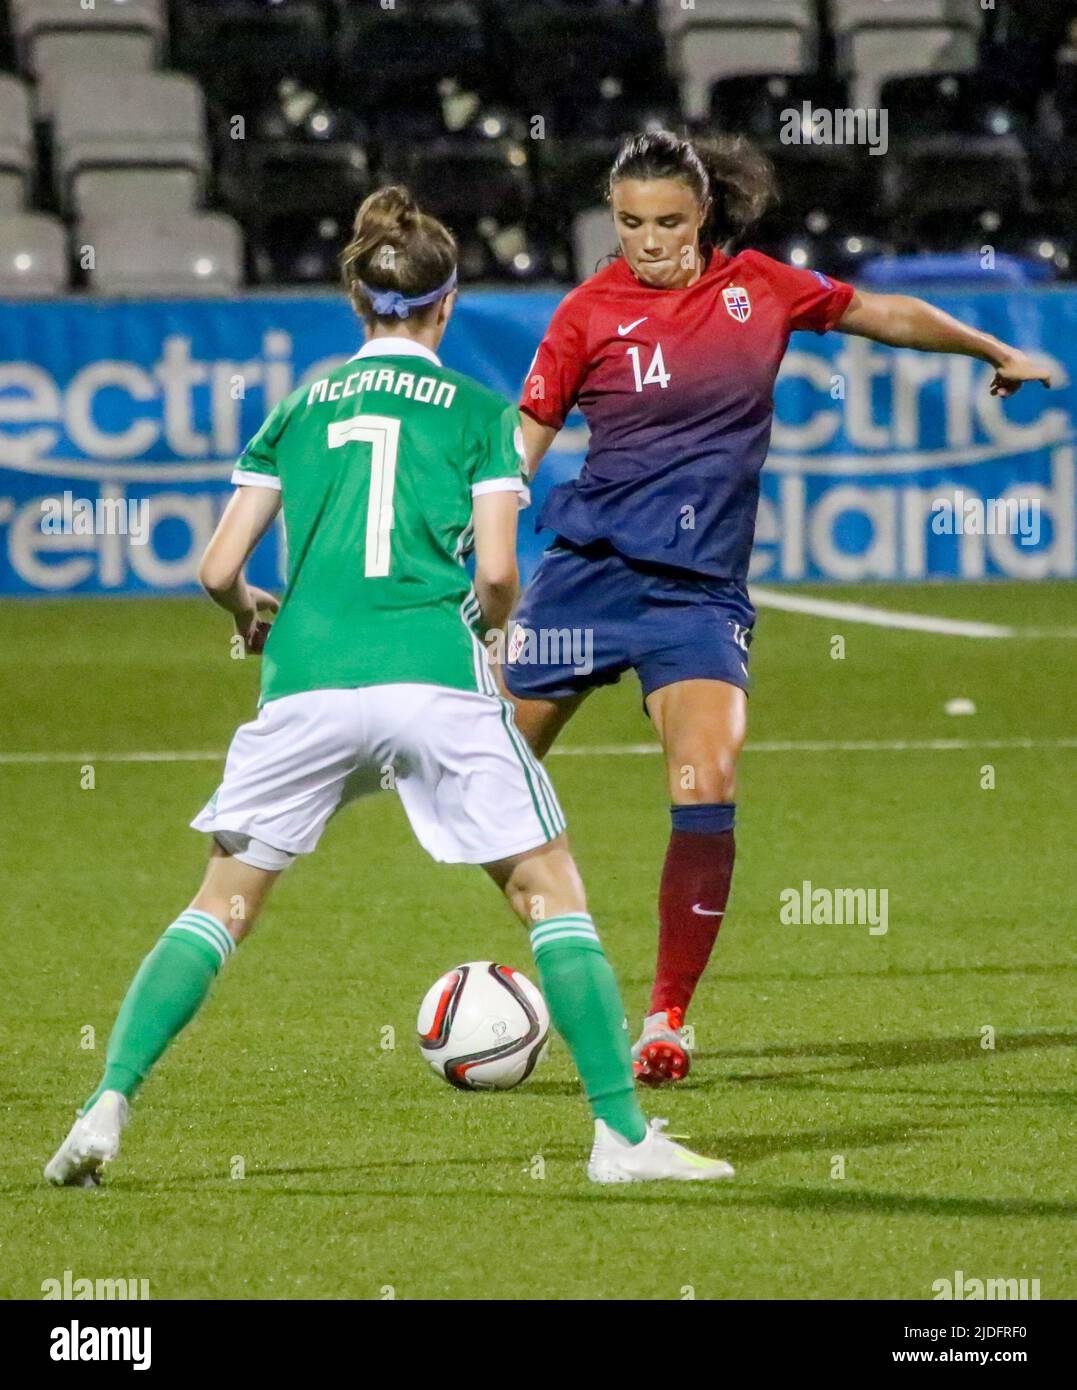 UEFA European Women's Championship 2021. 30 Aug 2019. Northern Ireland 0 Norway 6 at Seaview, Belfast. Norway Women's International football player Ingrid Syrstad Engen Norway (14) . Stock Photo